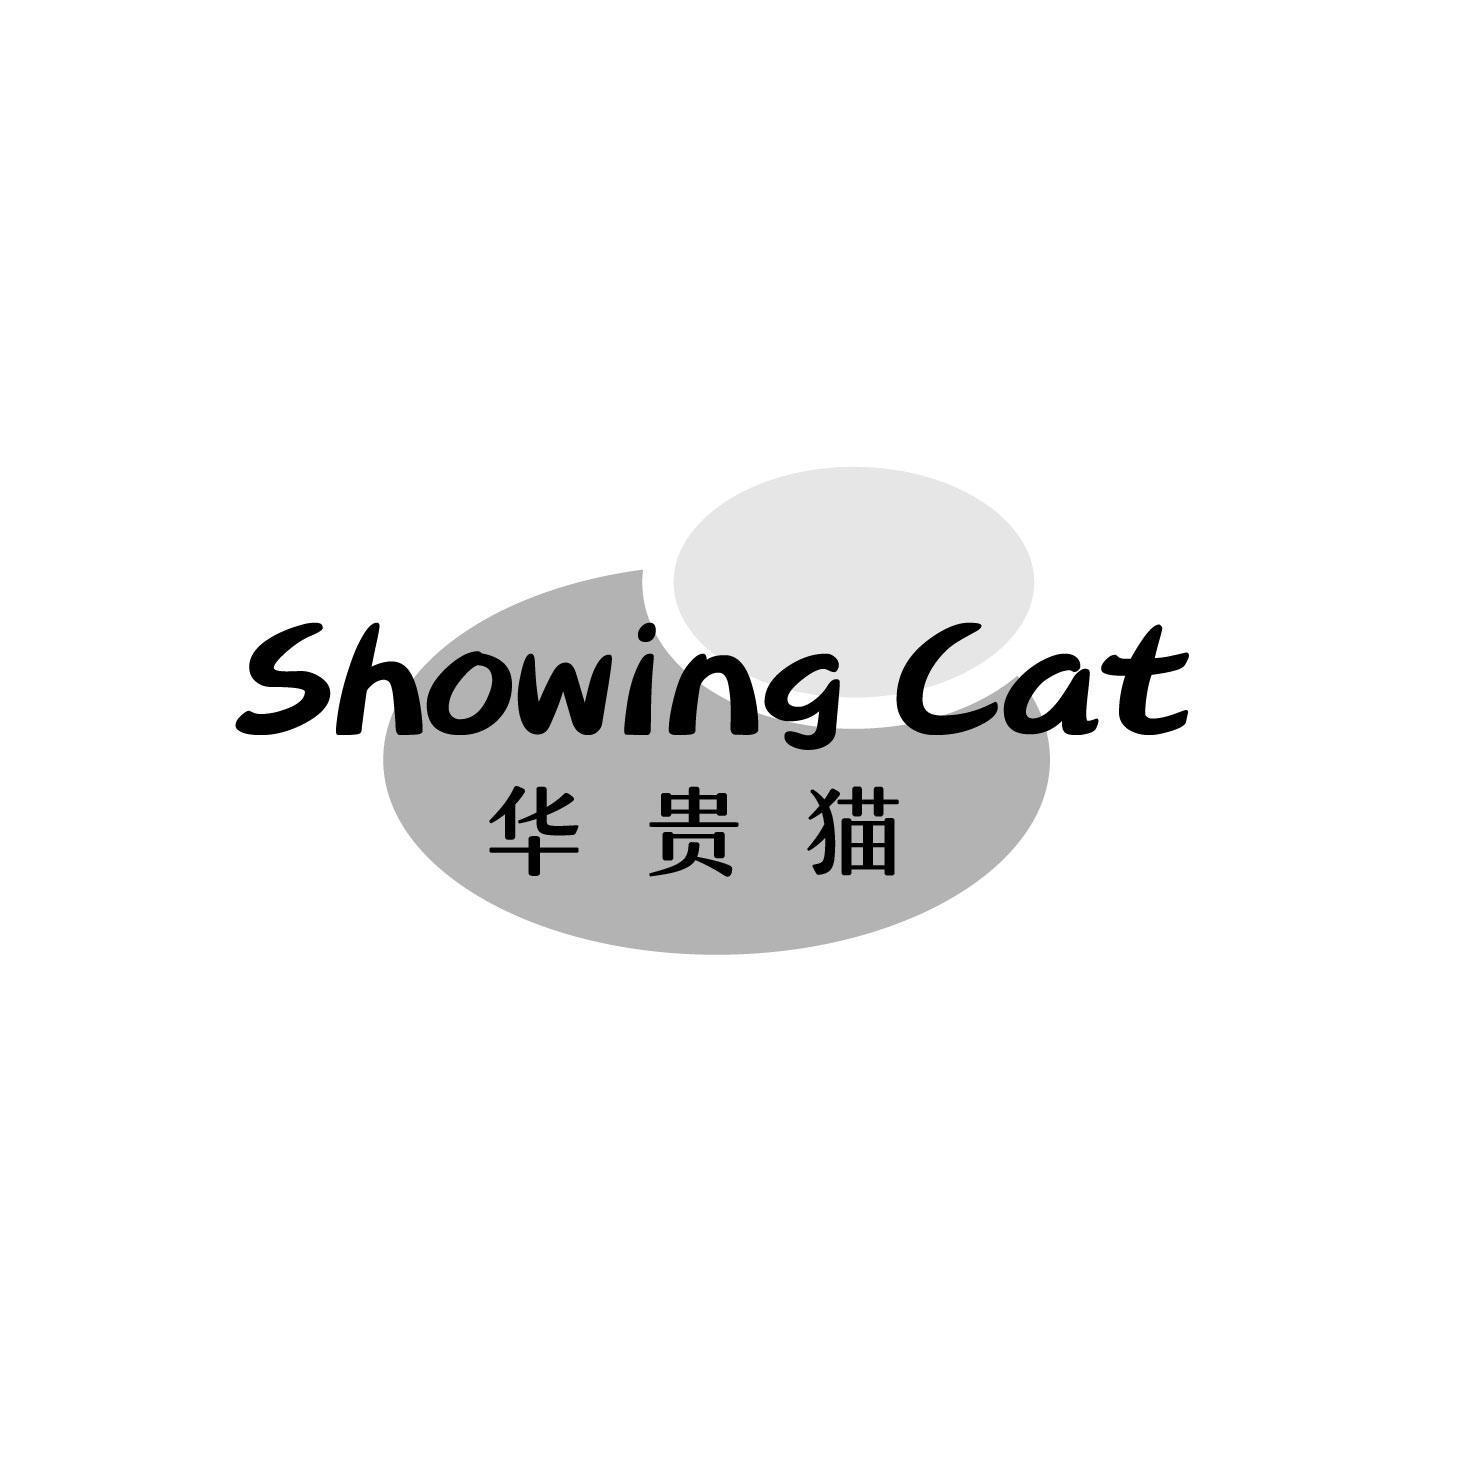 SHOWING CAT 华贵猫